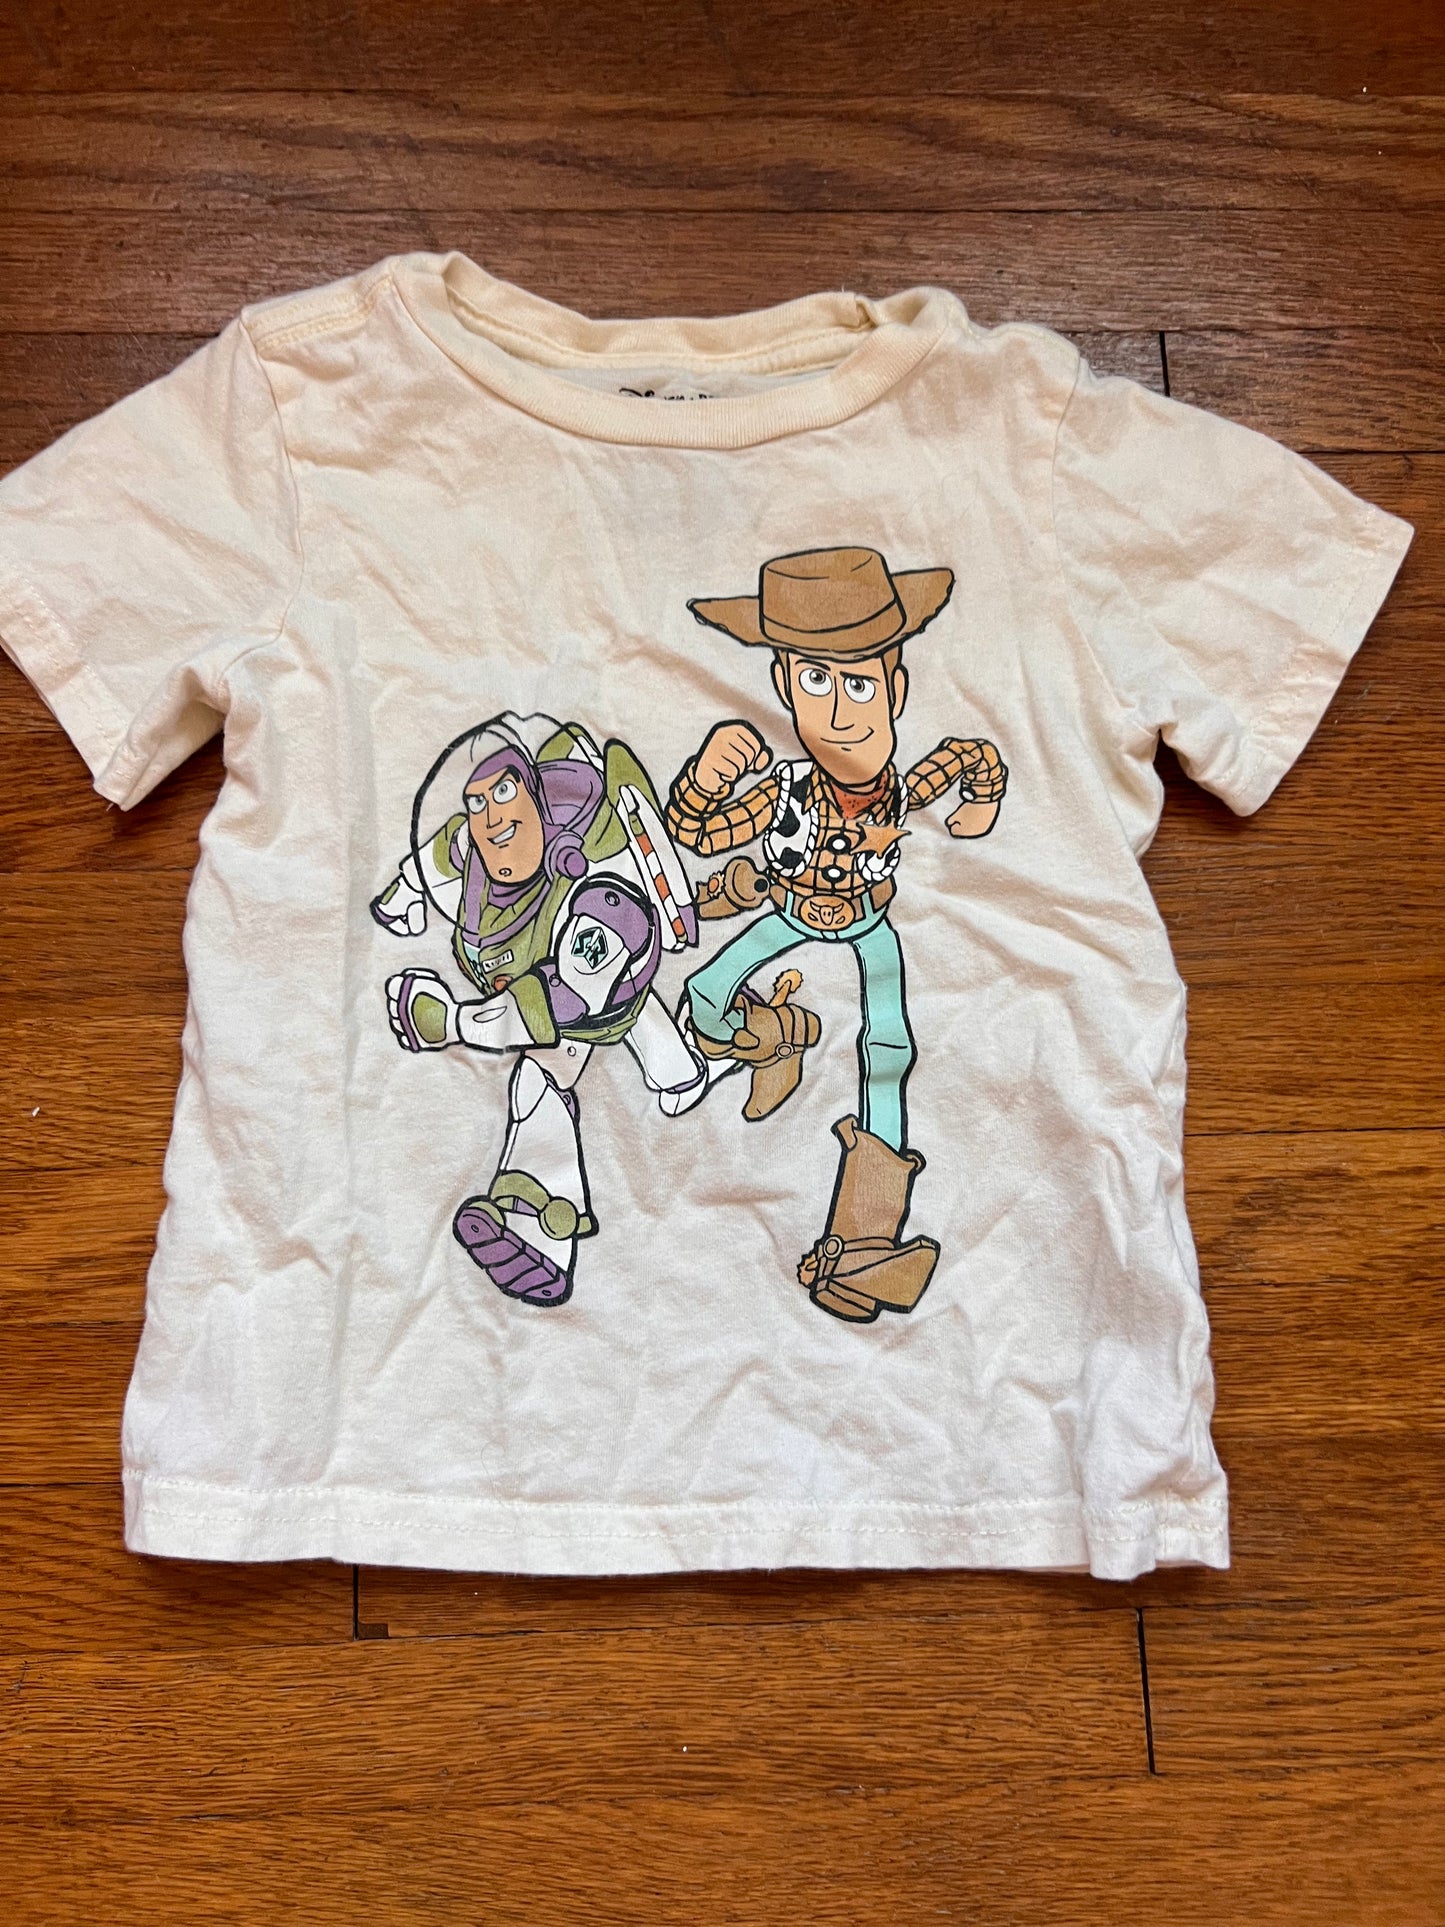 Toy Story 3t T Shirt PPU 45212